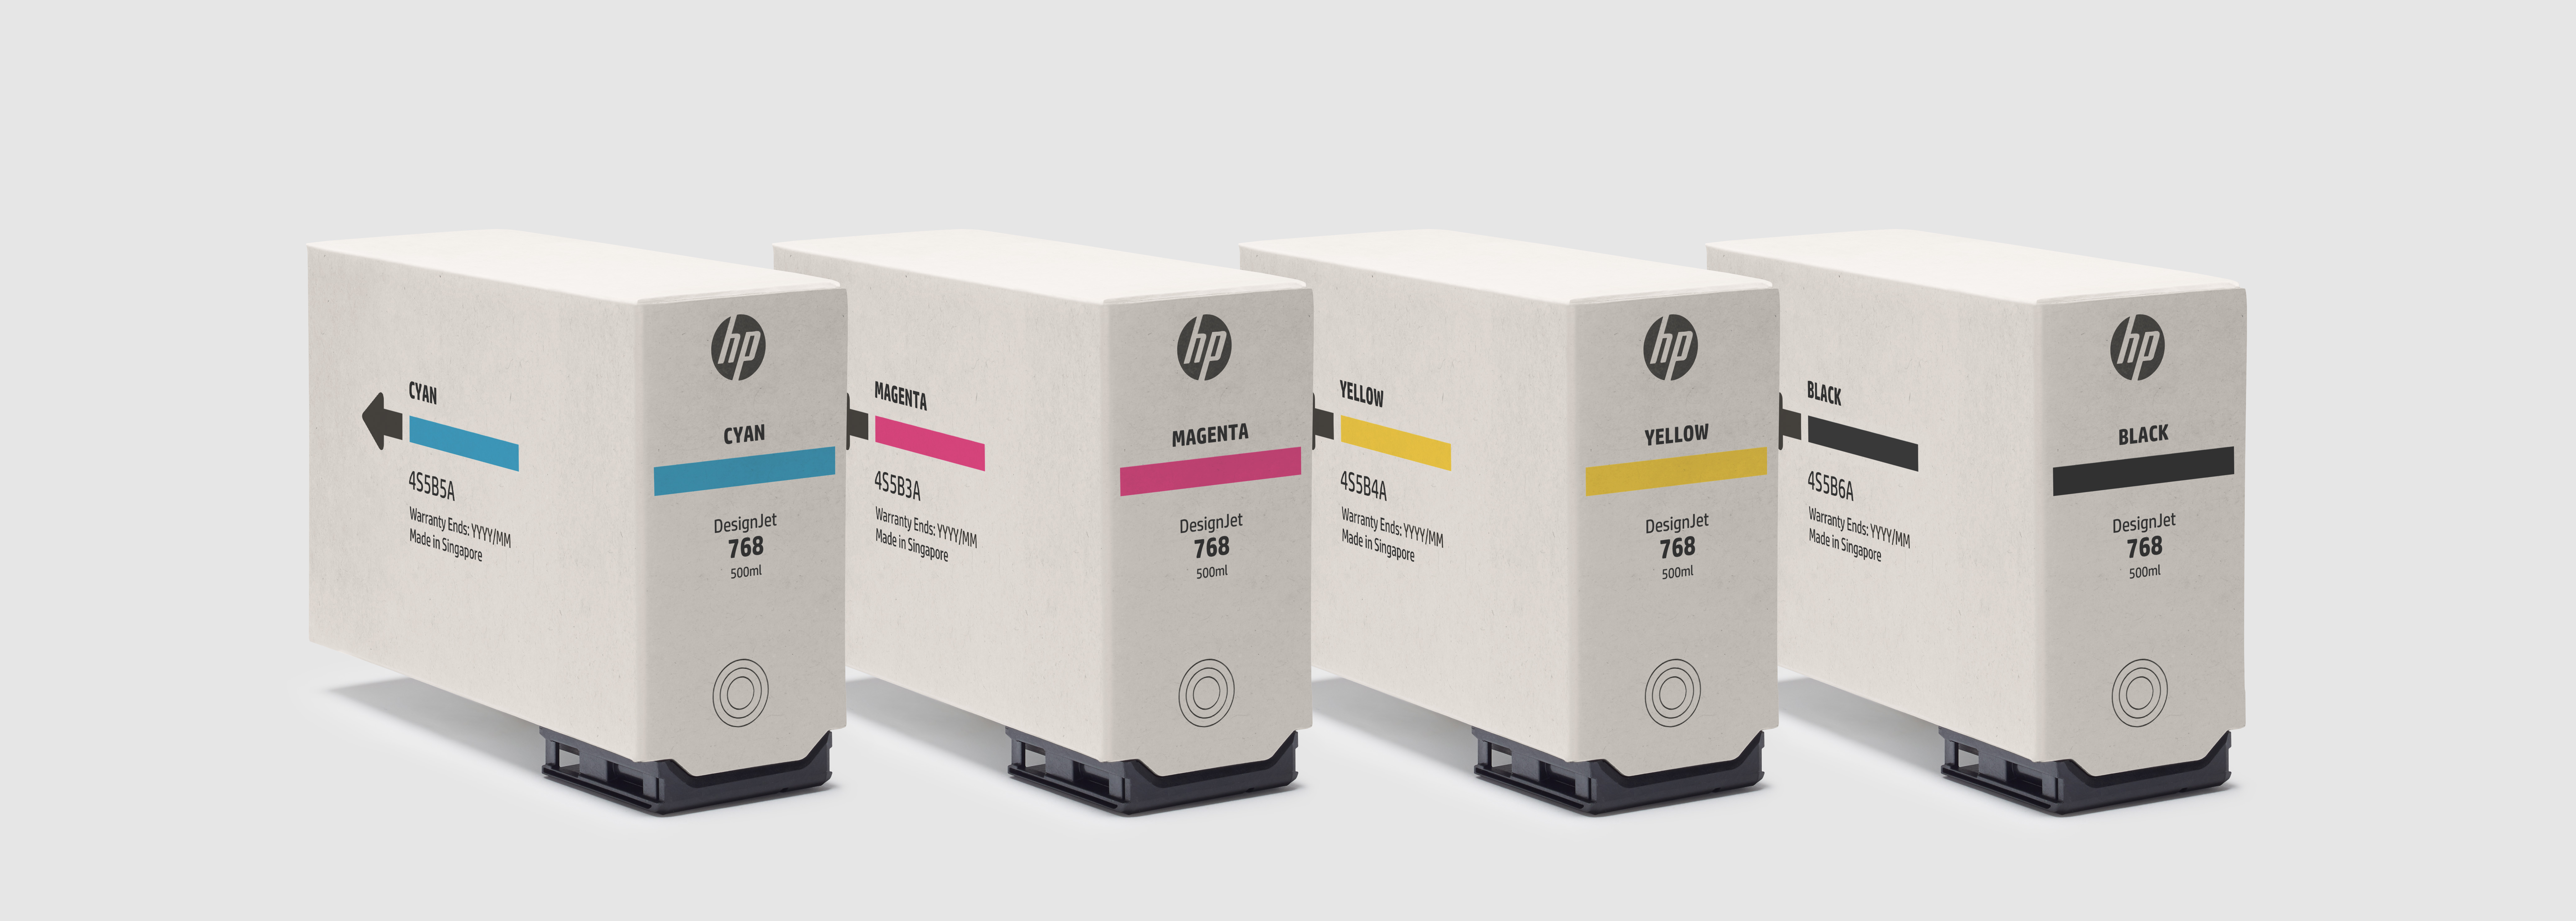 HP 768 Original Tinte Cyan - 500 ml